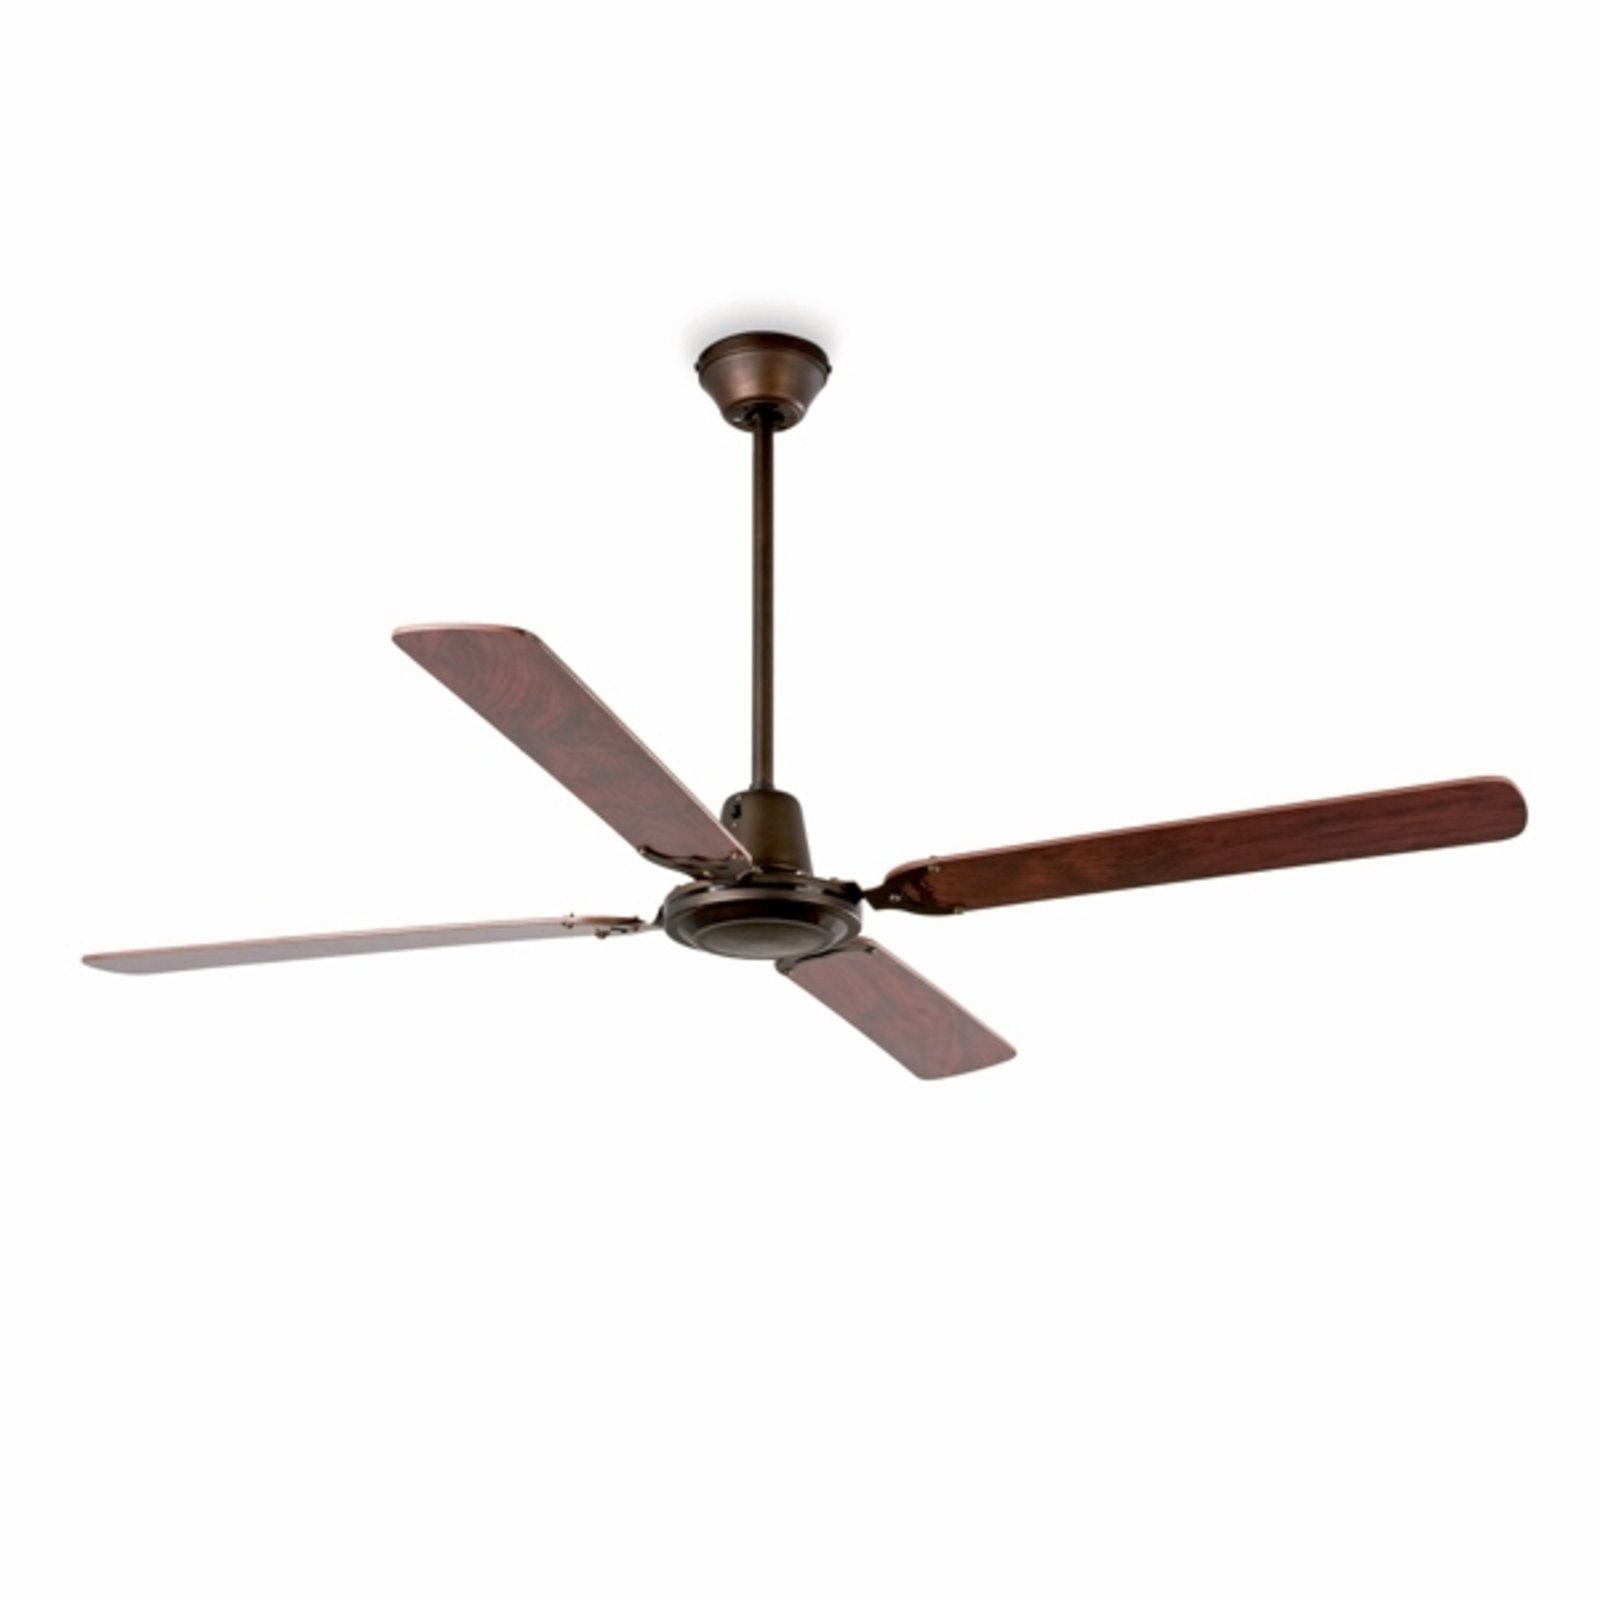 Malvinas ceiling fan, brown